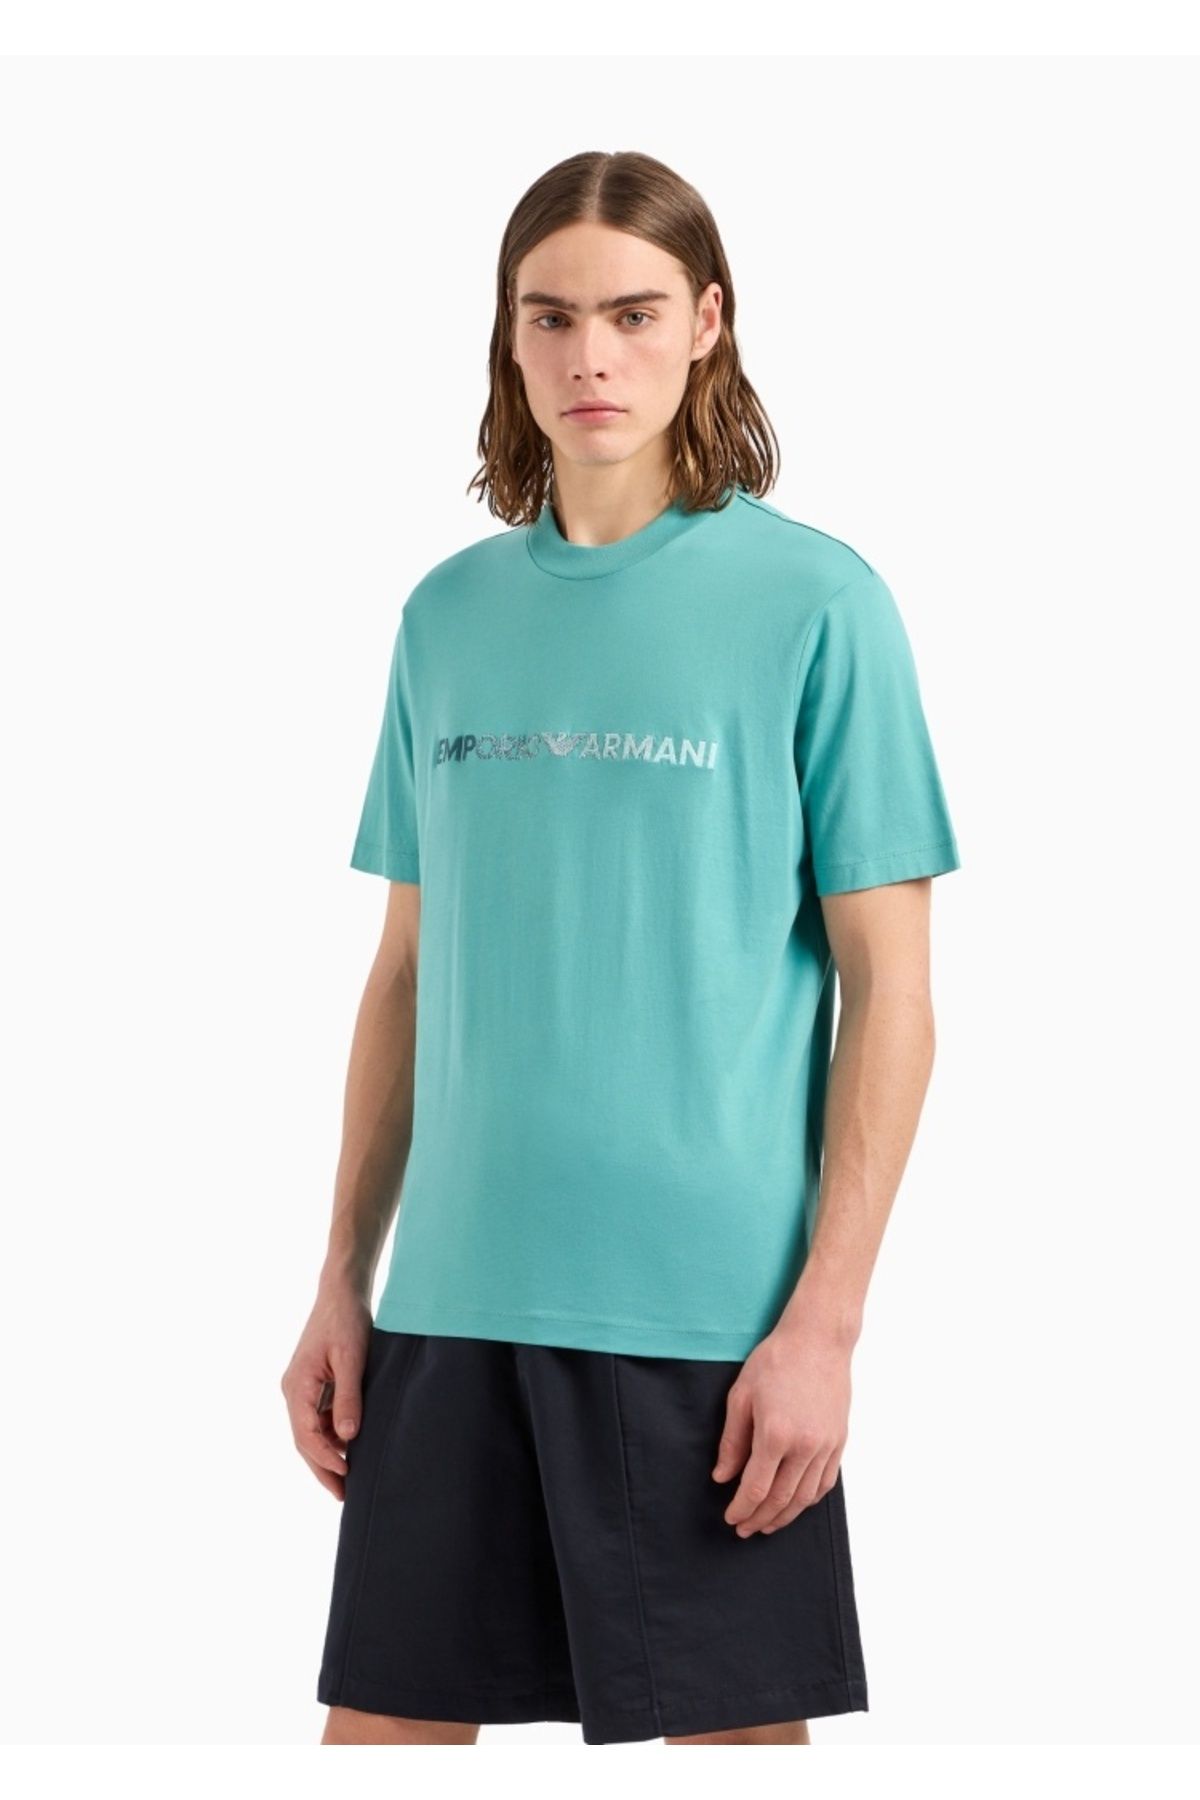 Emporio Armani Erkek Pamuklu Kısa Boy Rahat Kesim Günlük Petrol Yeşili T-Shirt 3D1TG3 1JPZZ-0758